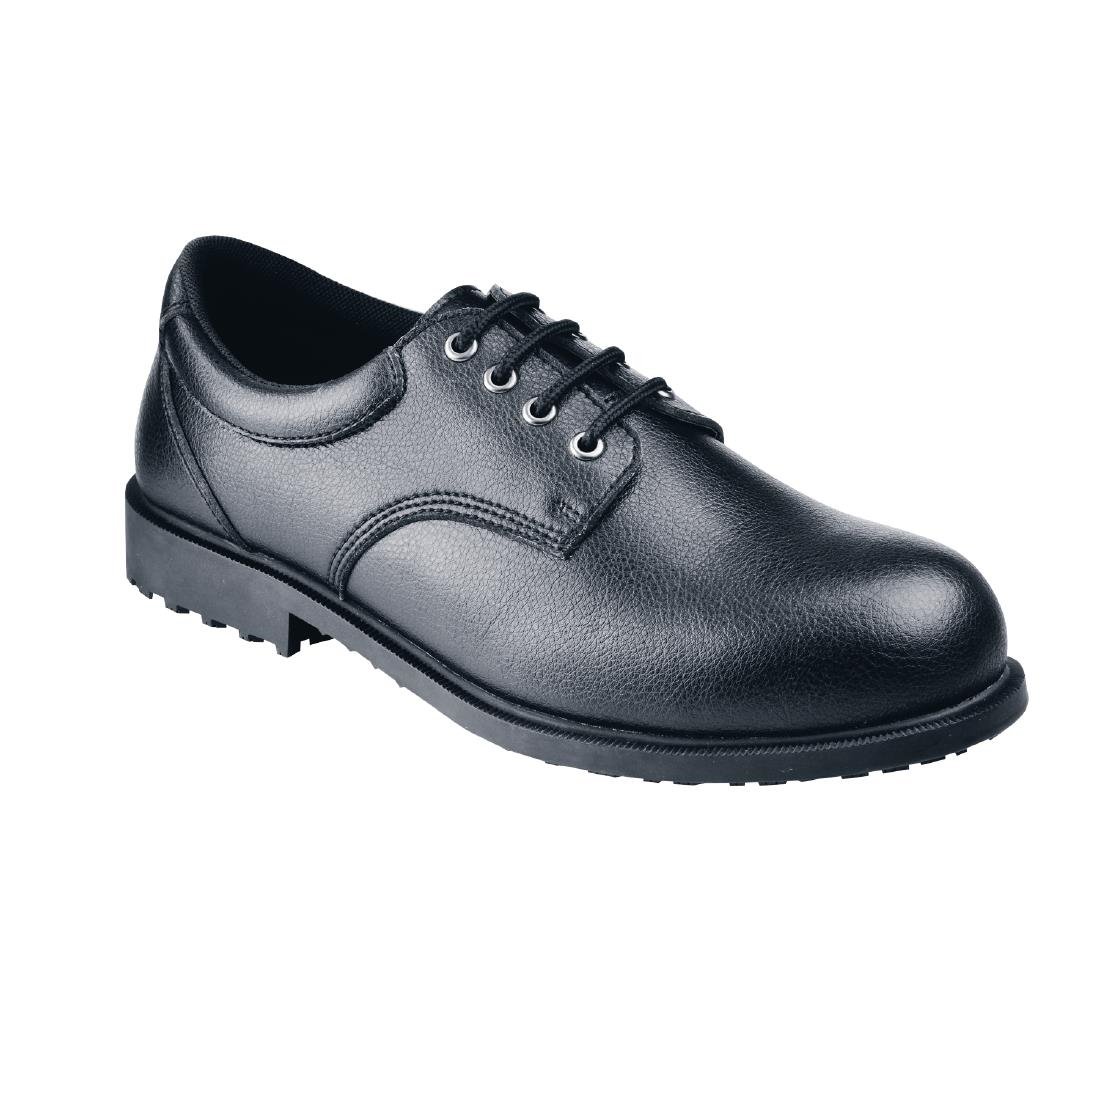 BB611-48 Shoes for Crews Cambridge Steel Toe Dress Shoe Size 48